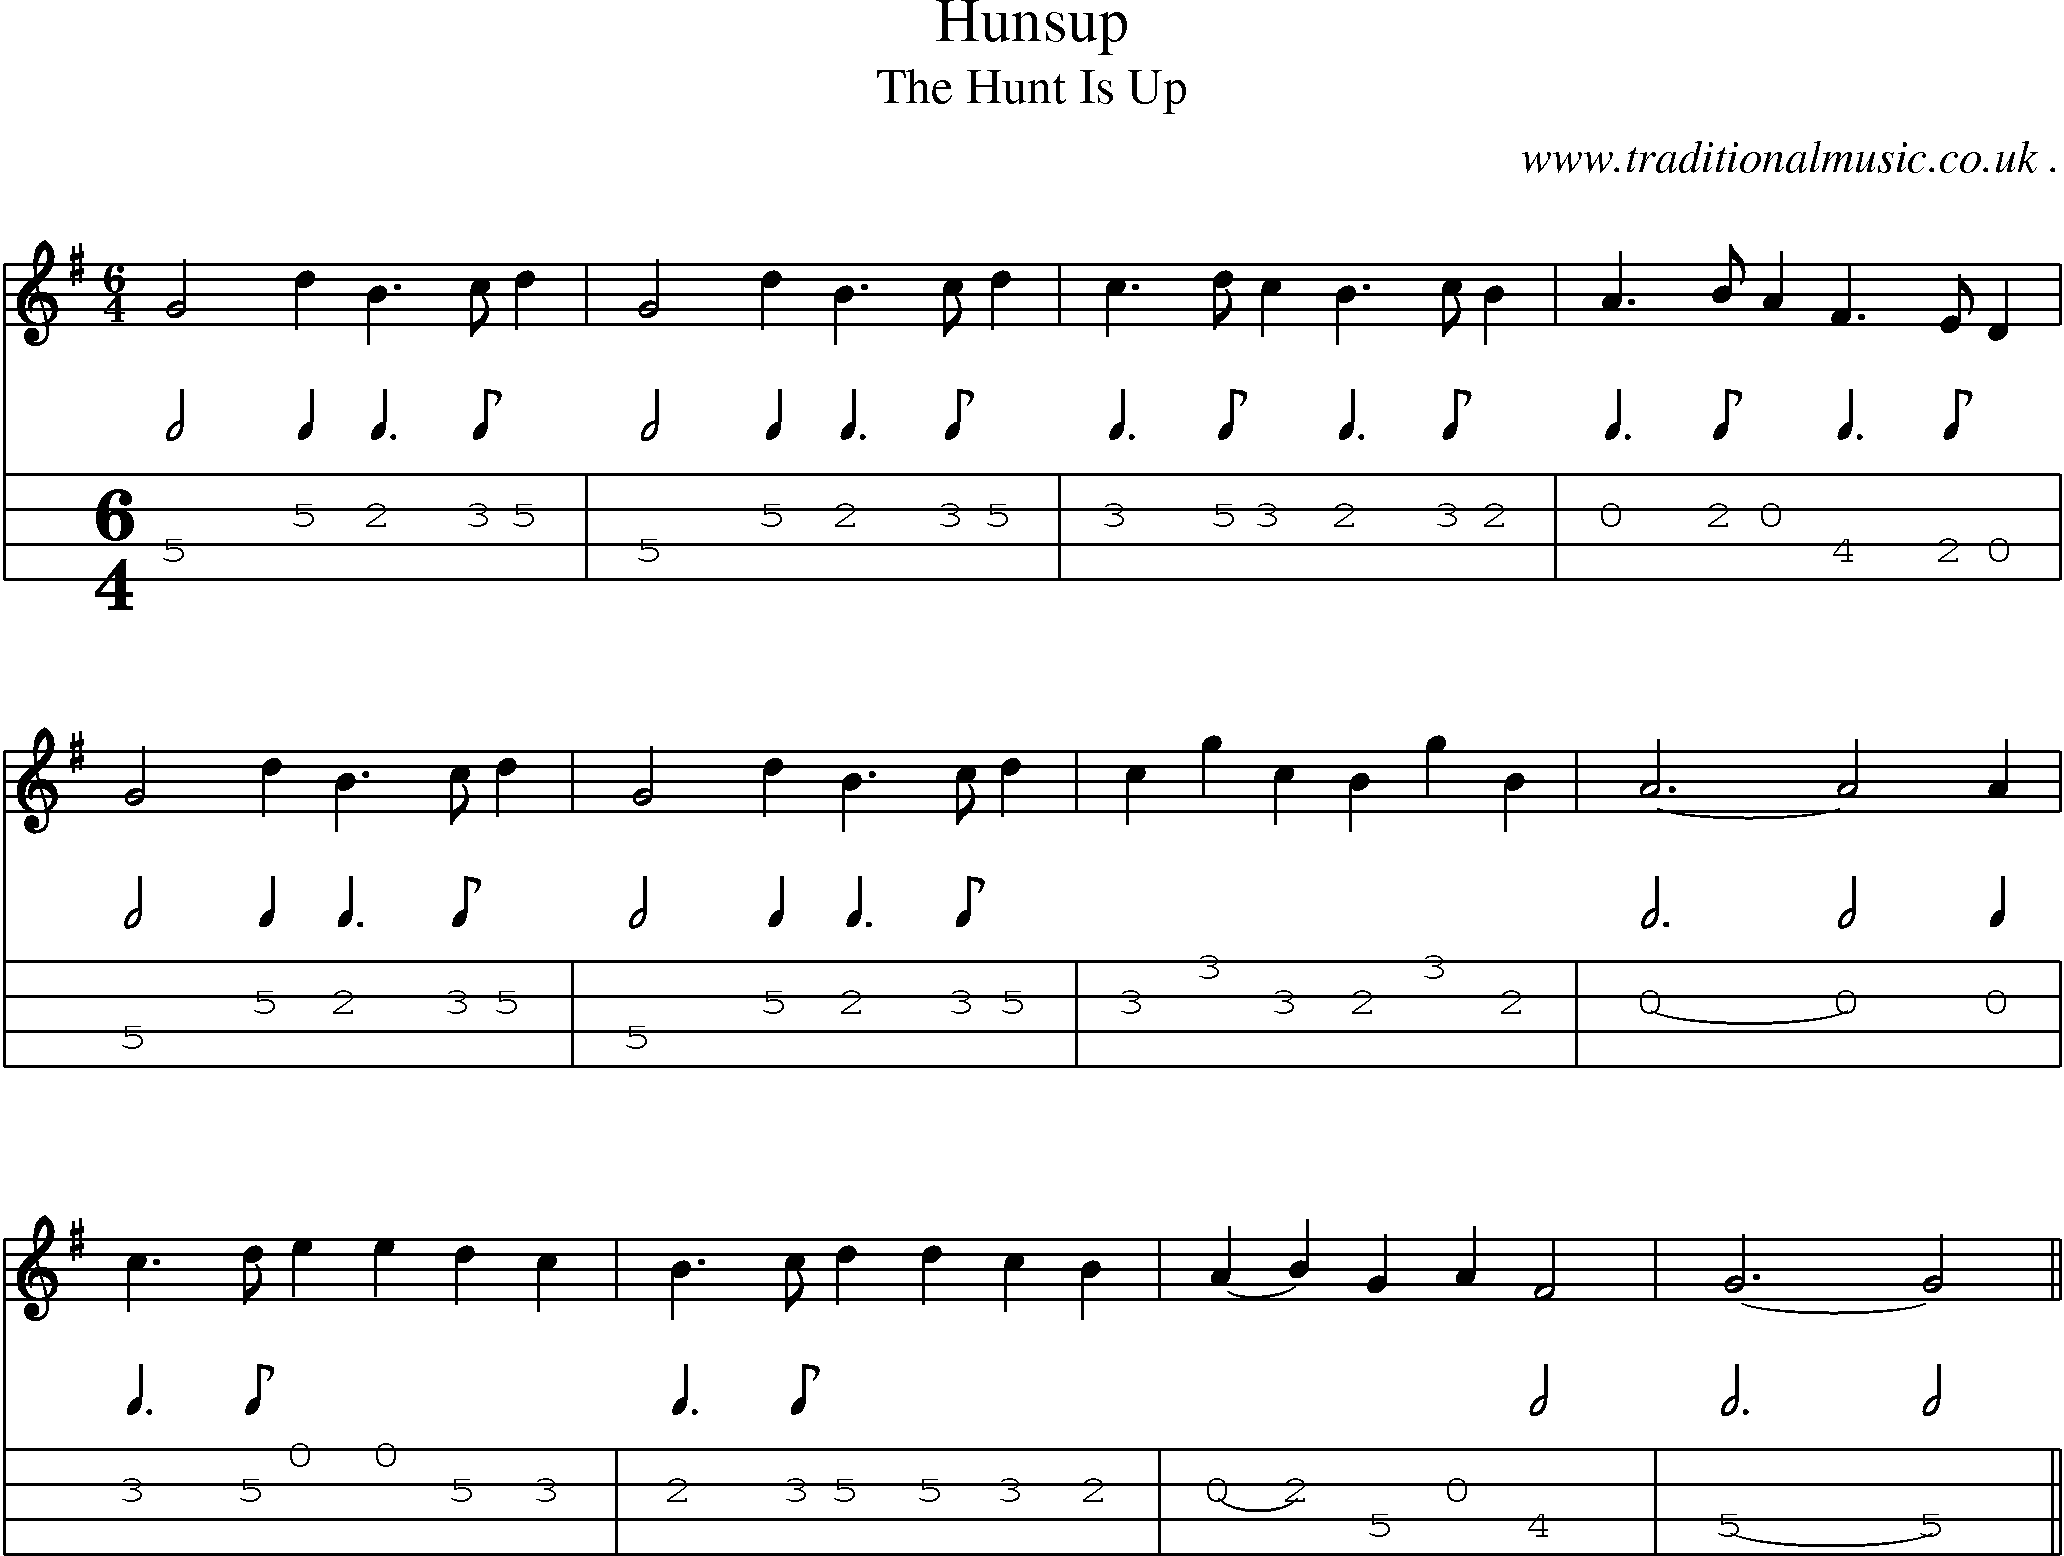 Sheet-Music and Mandolin Tabs for Hunsup